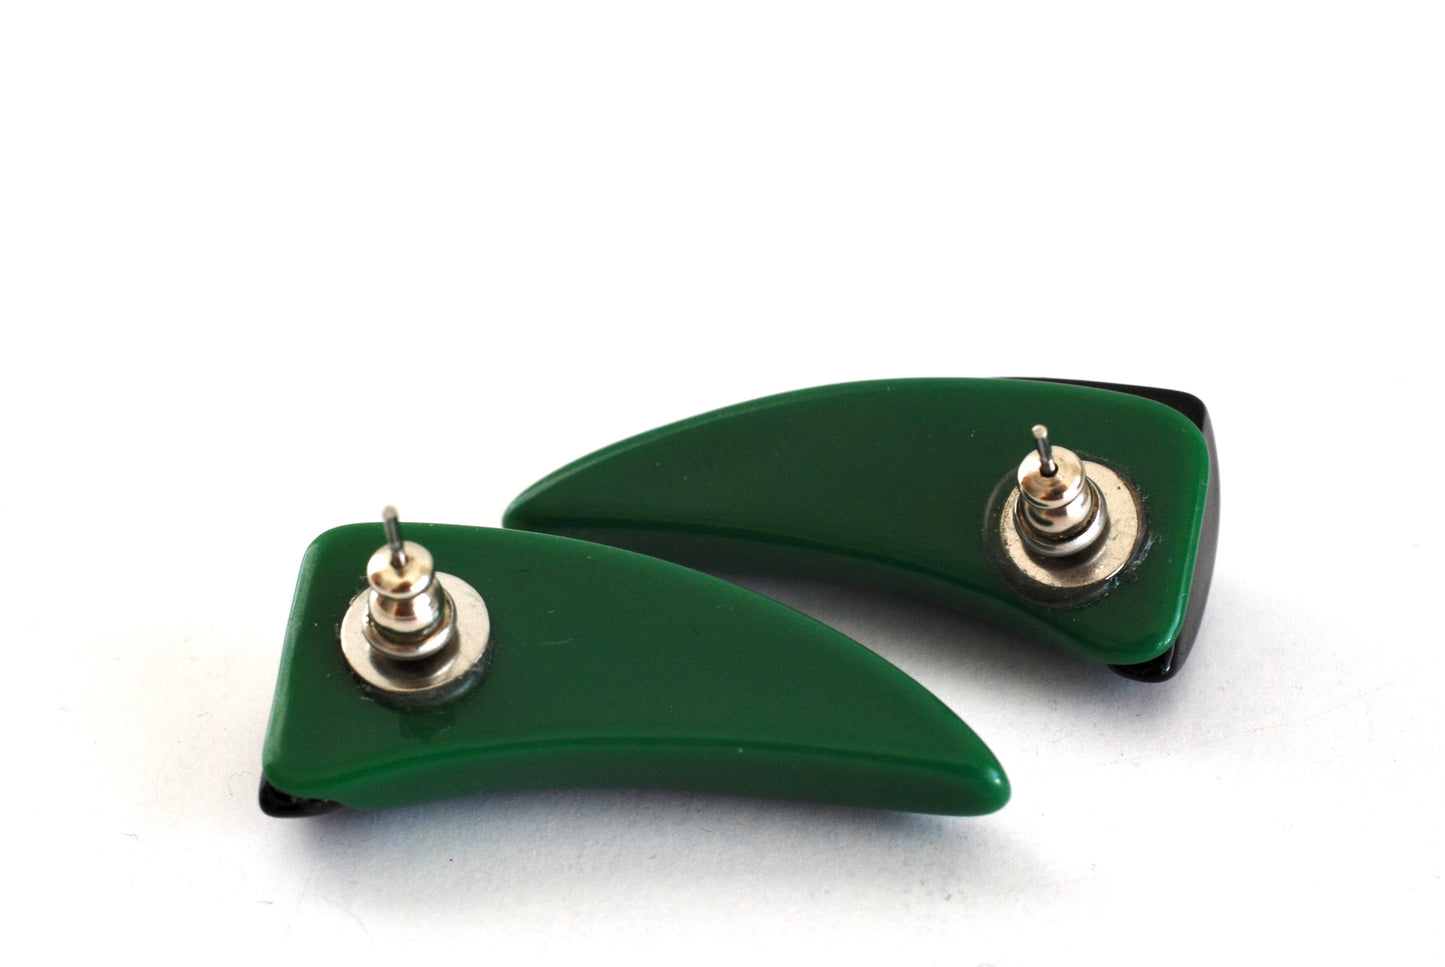 Vintage Green and Black Earrings Horn Shape Pierced